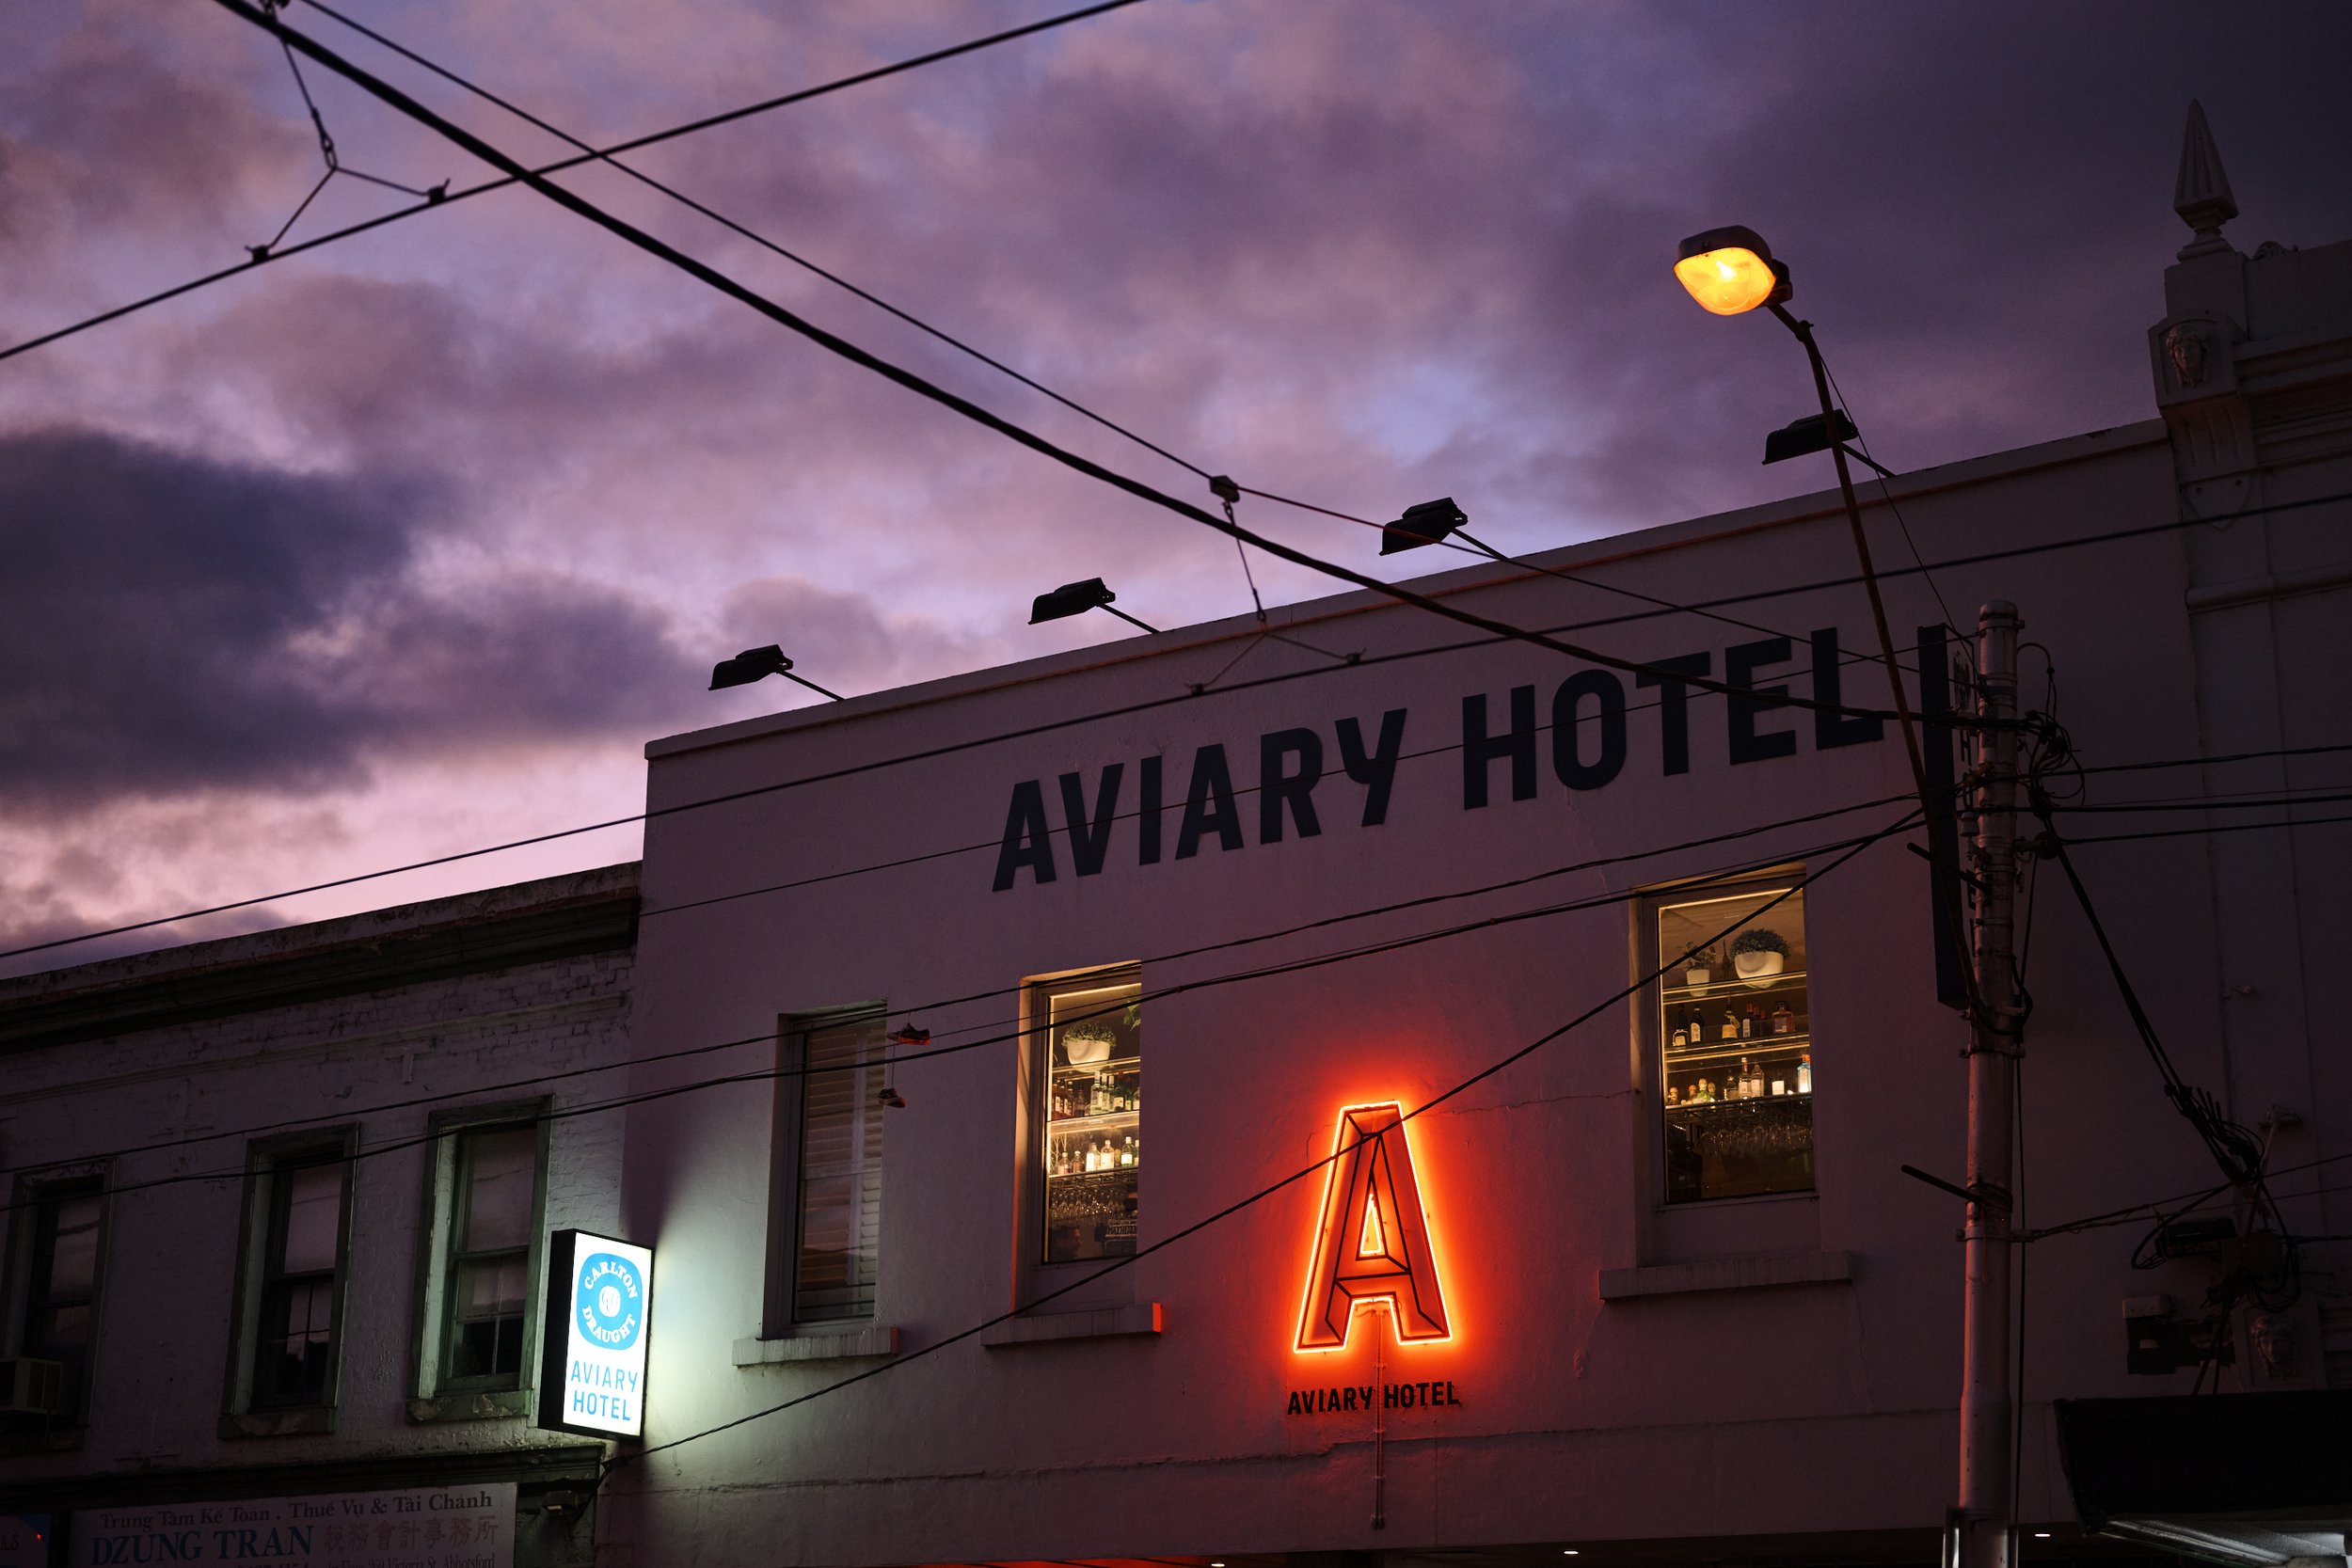 Aviary Hotel - Serv Agency - Longboy Media 2 (1).jpg